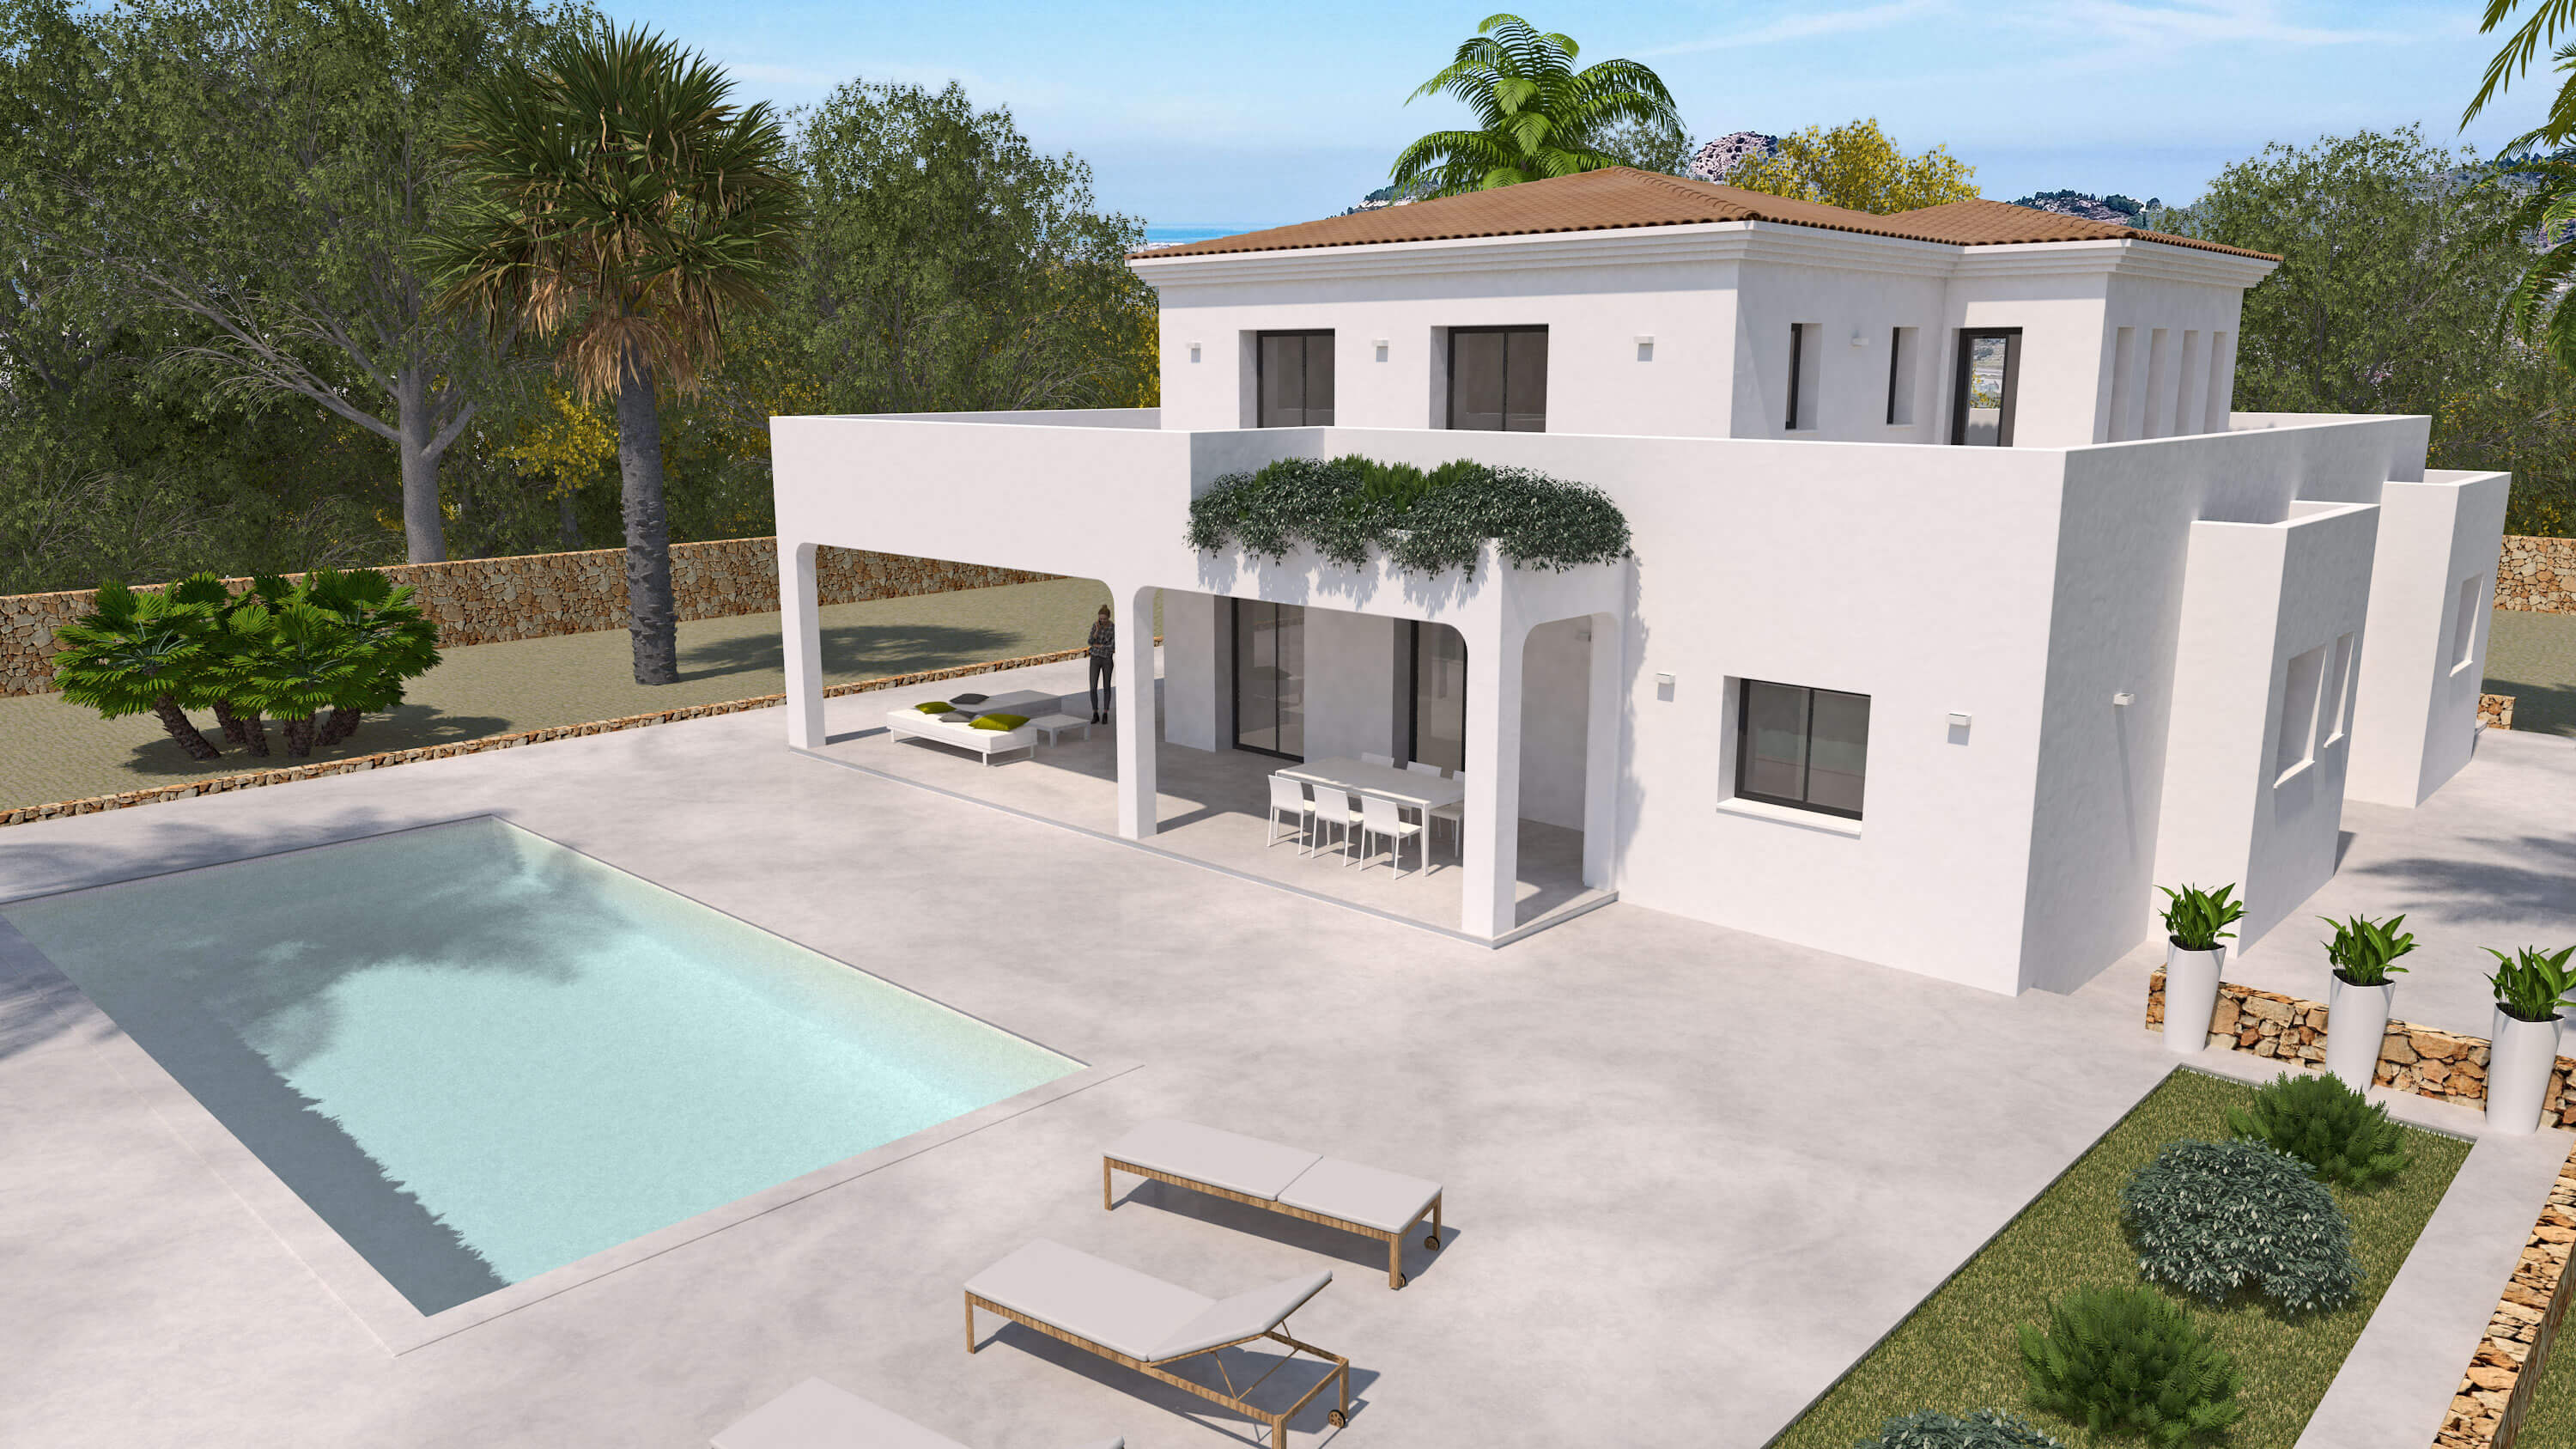 Magnificent Ibiza style villa on 10,000m2